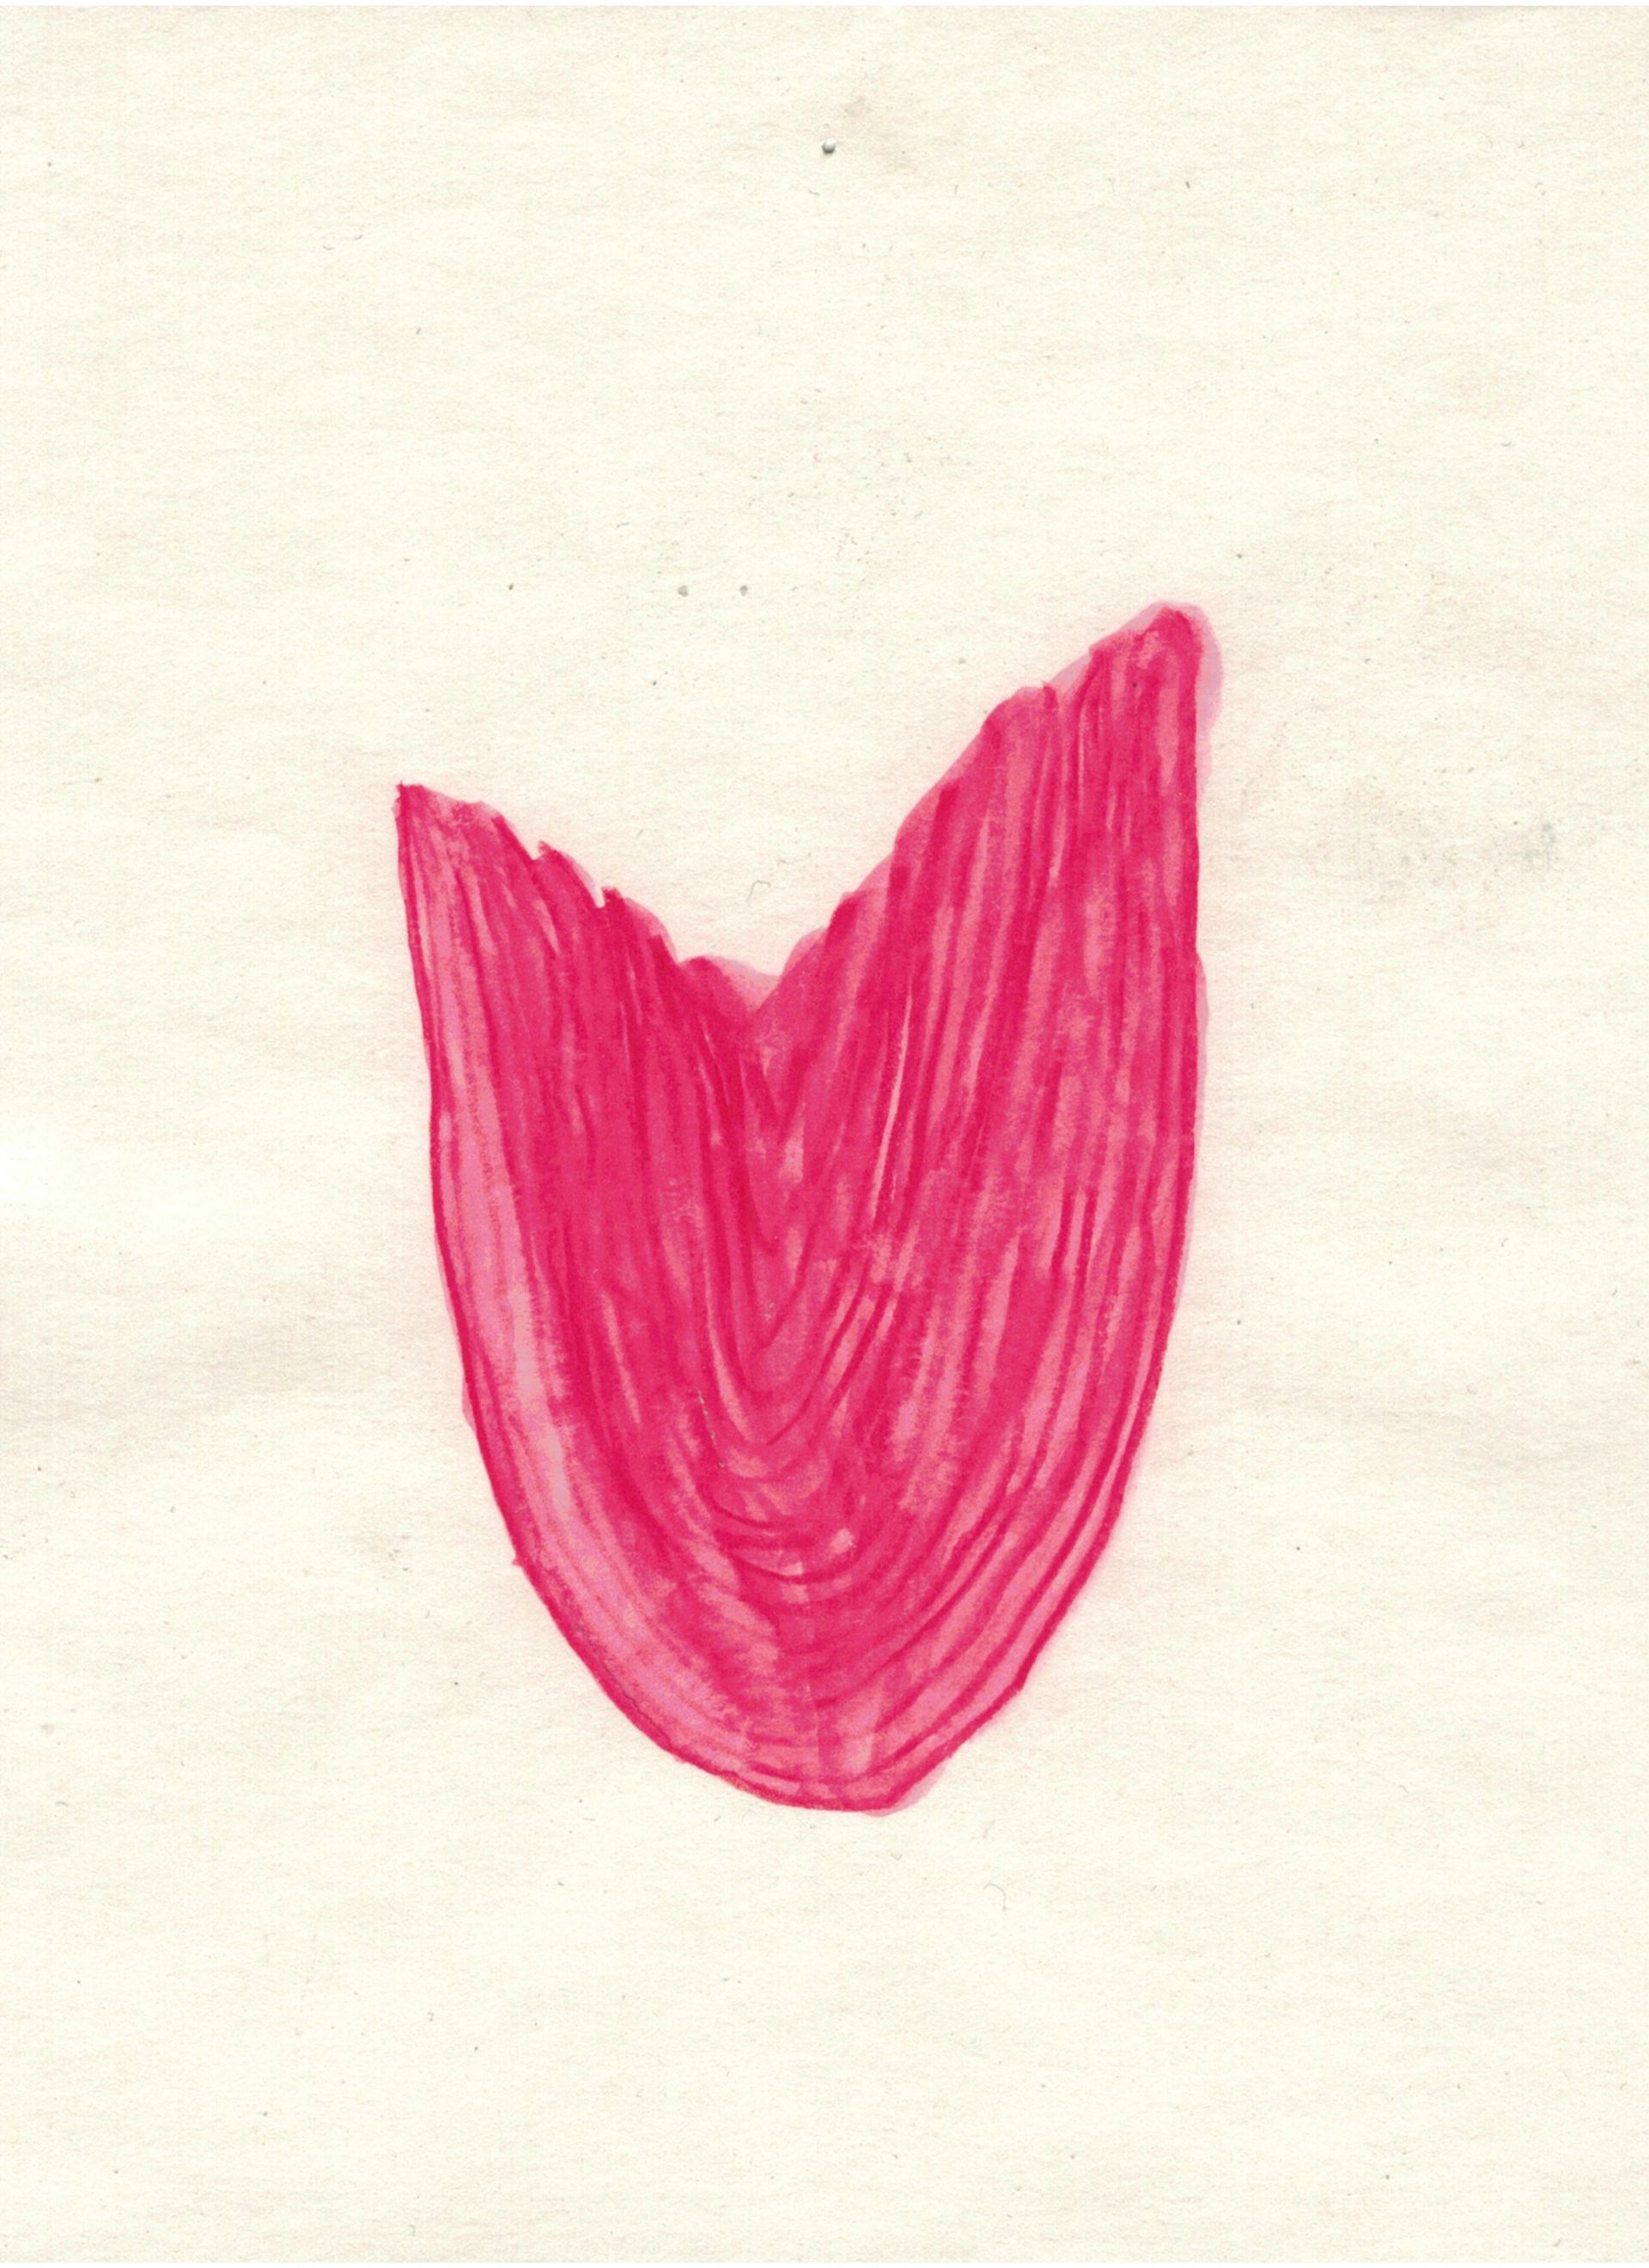 Malte Zenses, Die Zunge vor dem Kaffee, 2021, watercolor pencil on paper, 21 × 14.8 cm